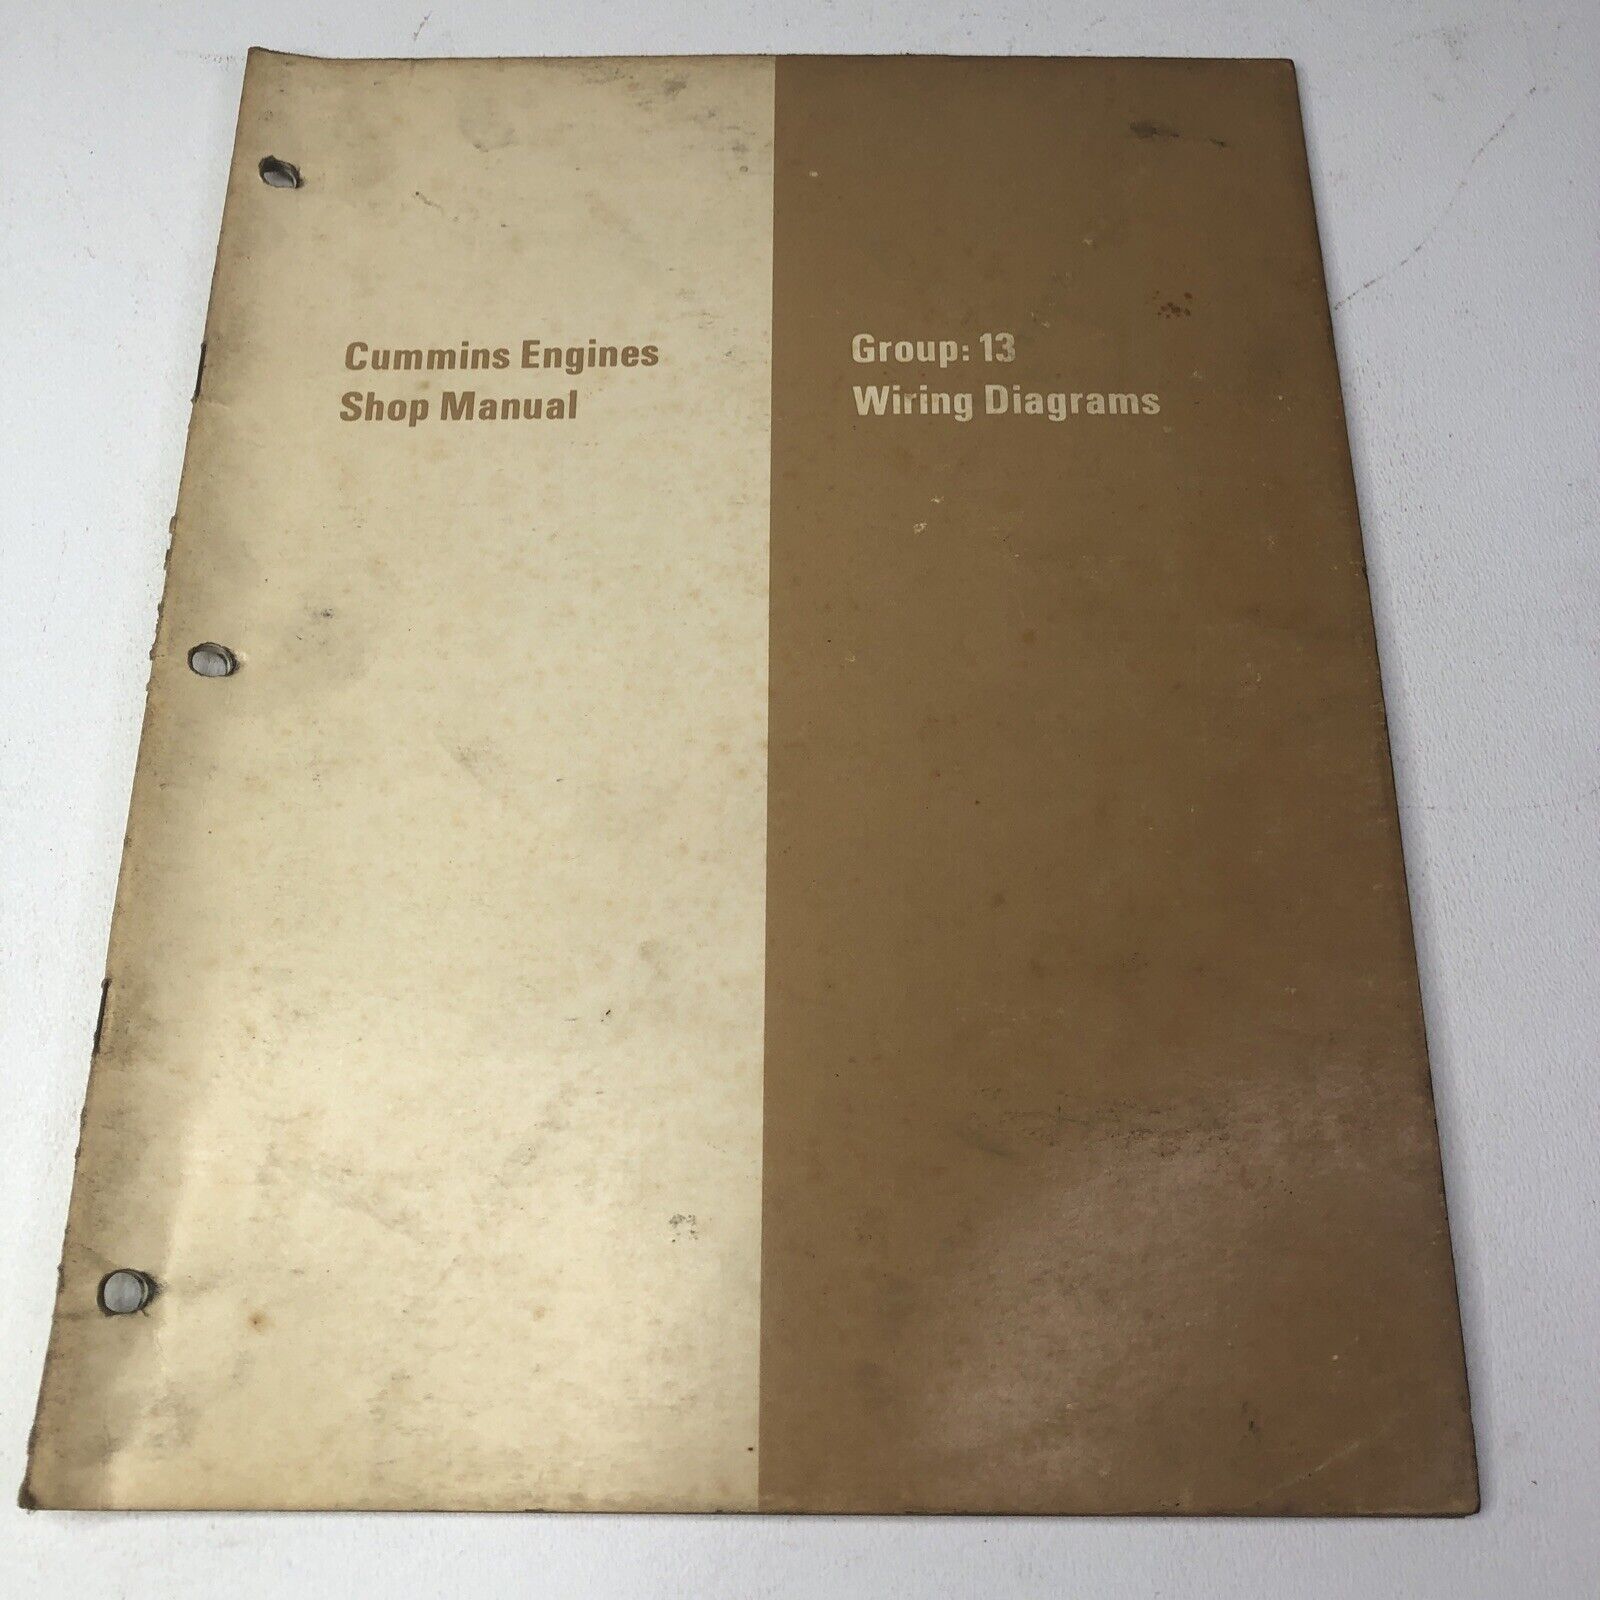 Cummins Diesel Engines Shop Manual Group 13 Wiring Bulletin No. 983444 CE 1971